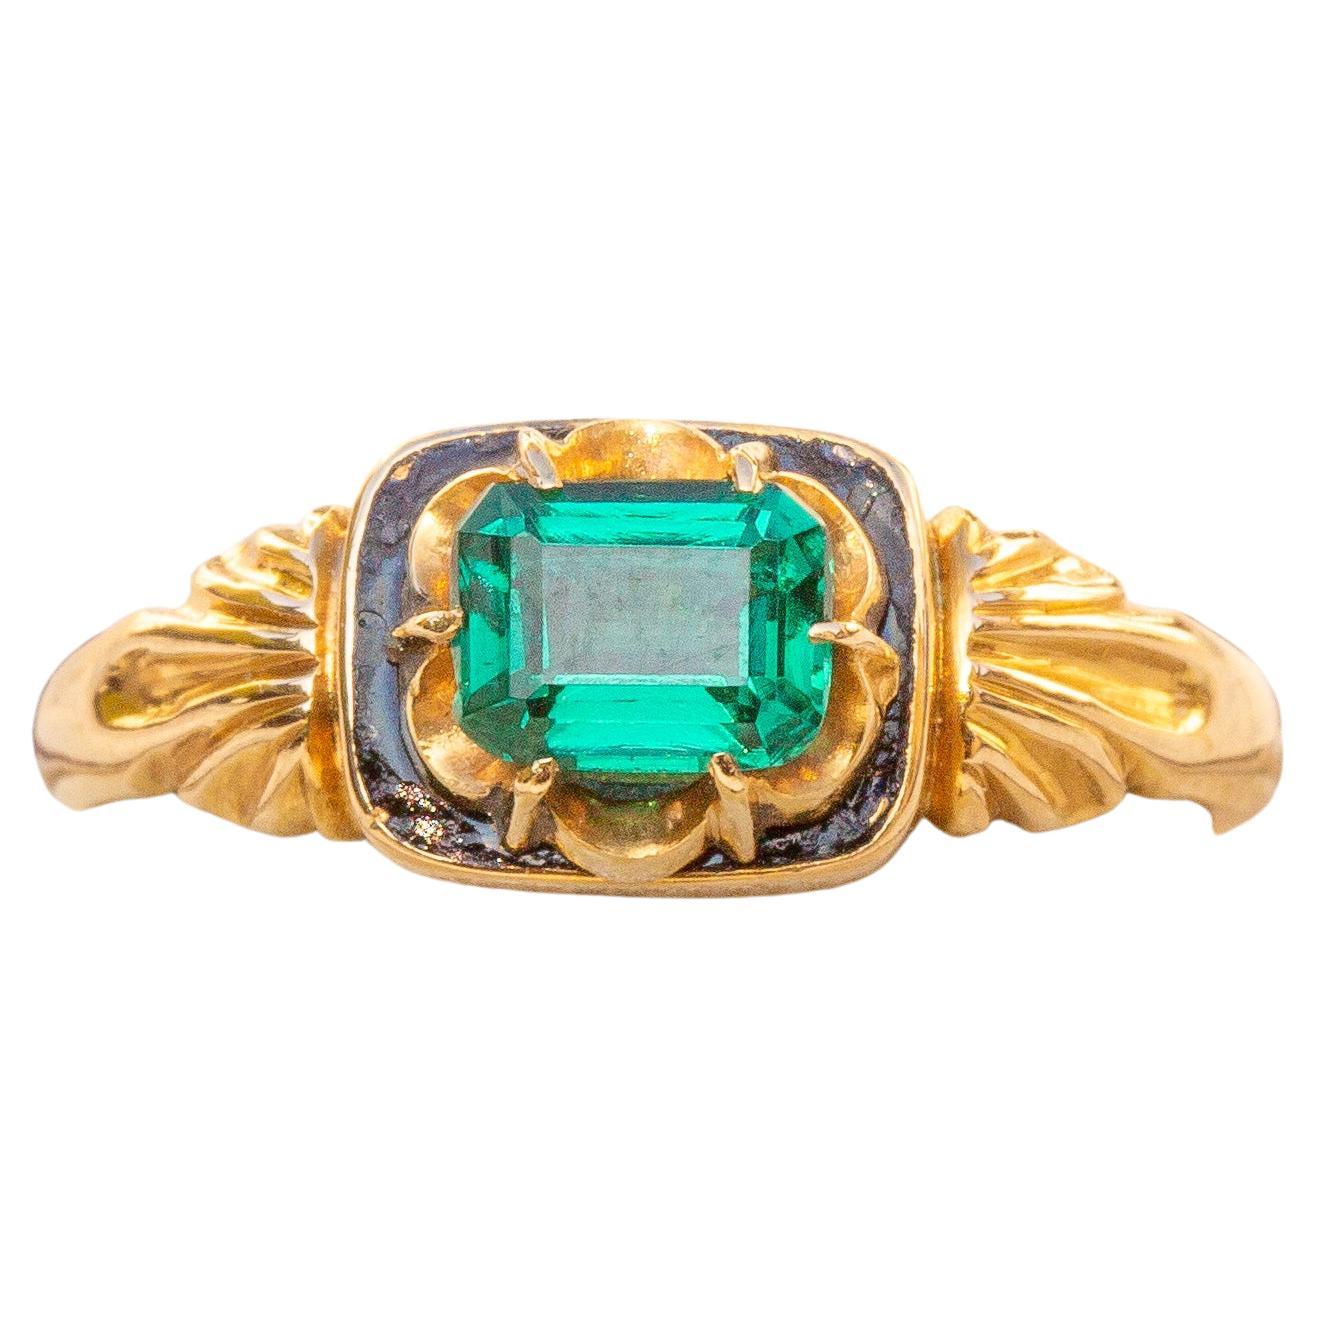 Antique Victorian Green Paste Black Enamel 18k Gold Ring Unusual 19th Century